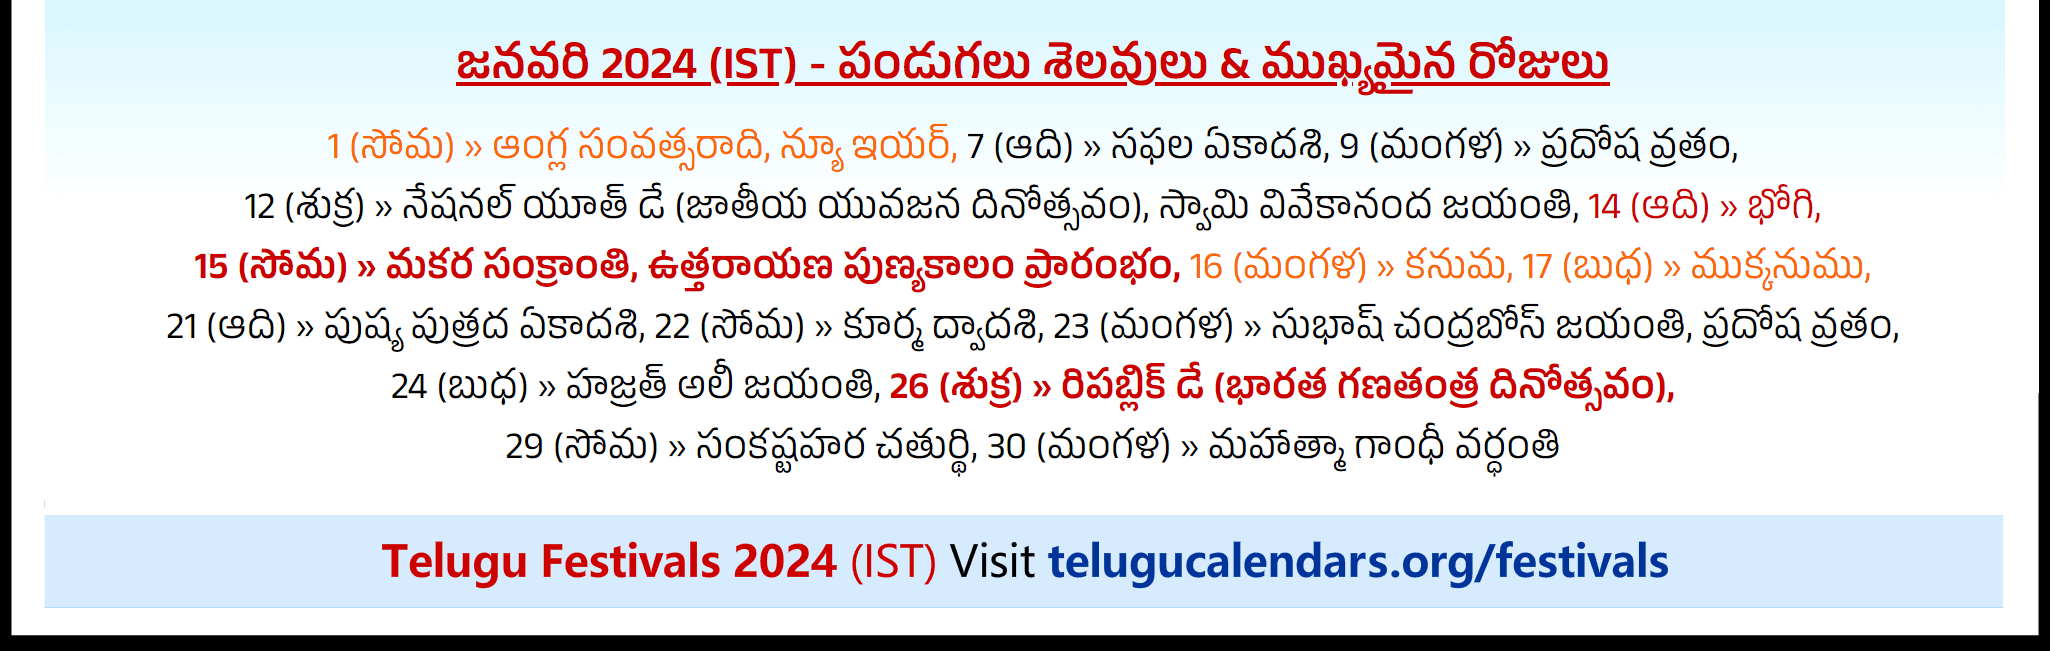 Telugu Festivals 2024 January Perth